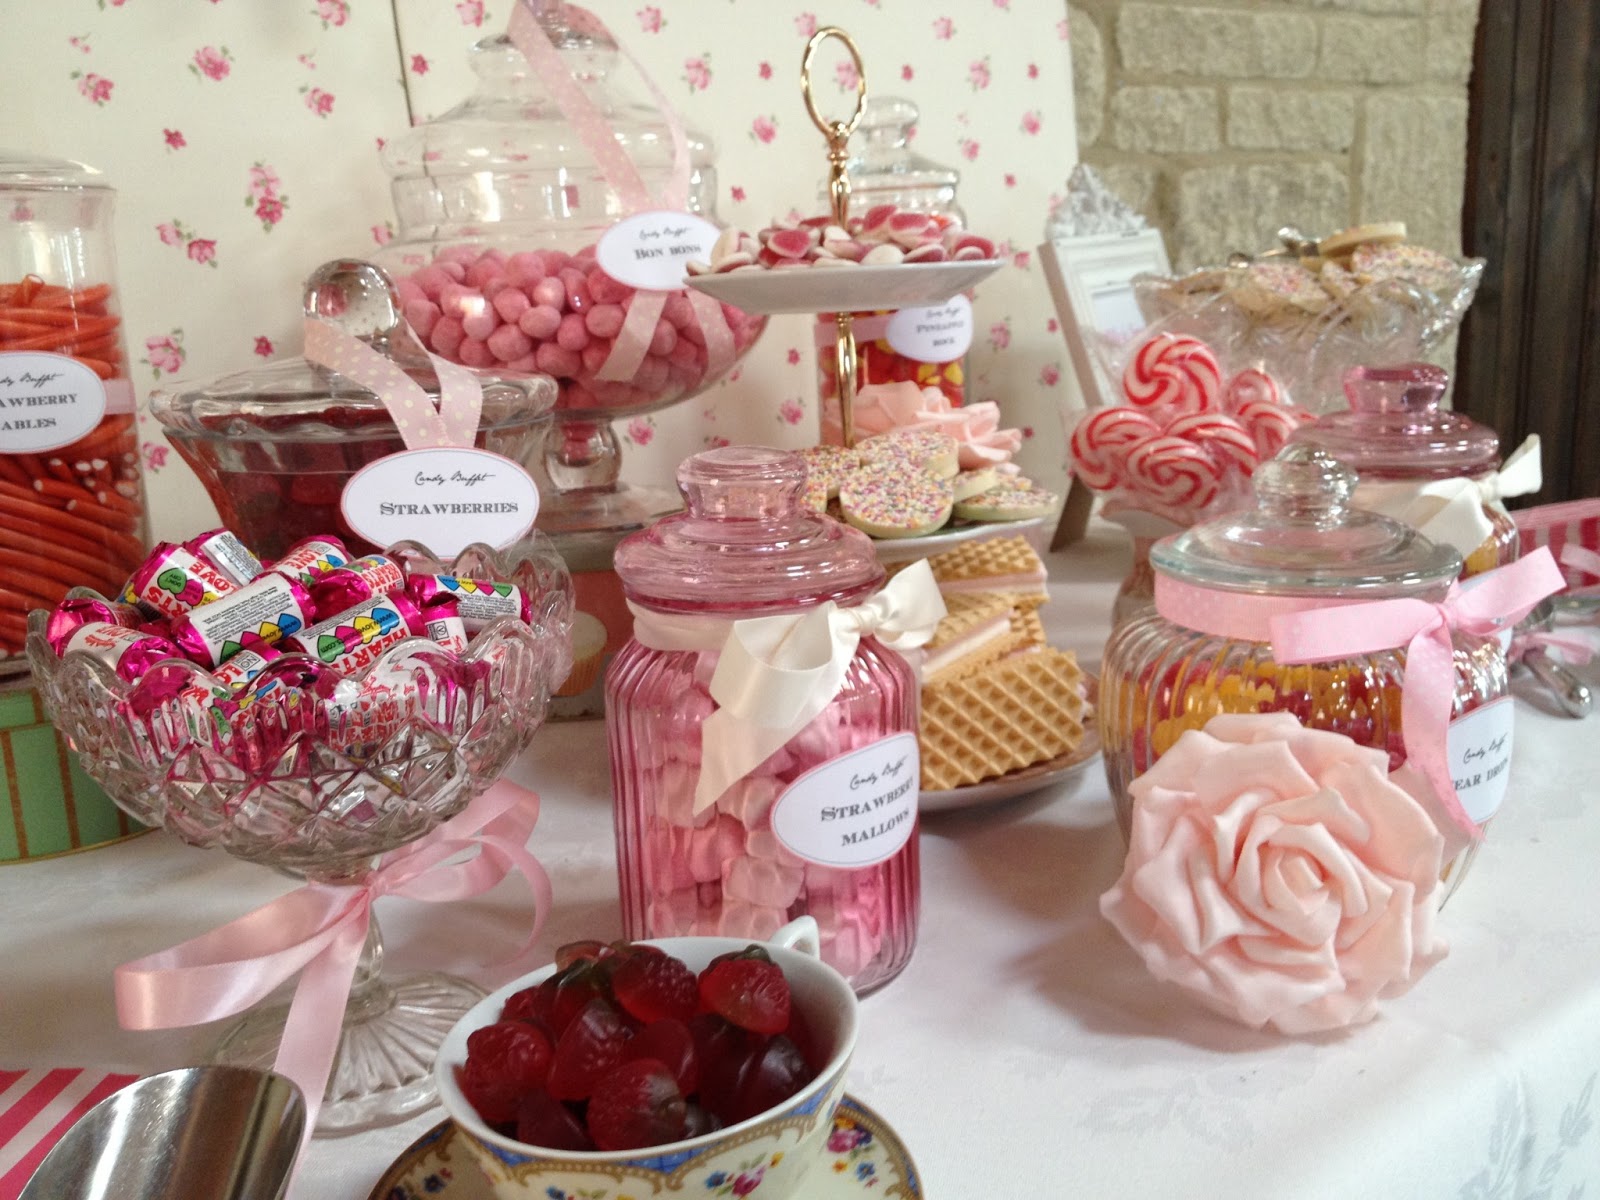 Bristol Wedding News: Bristol\u002639;s Best Sweet Tables